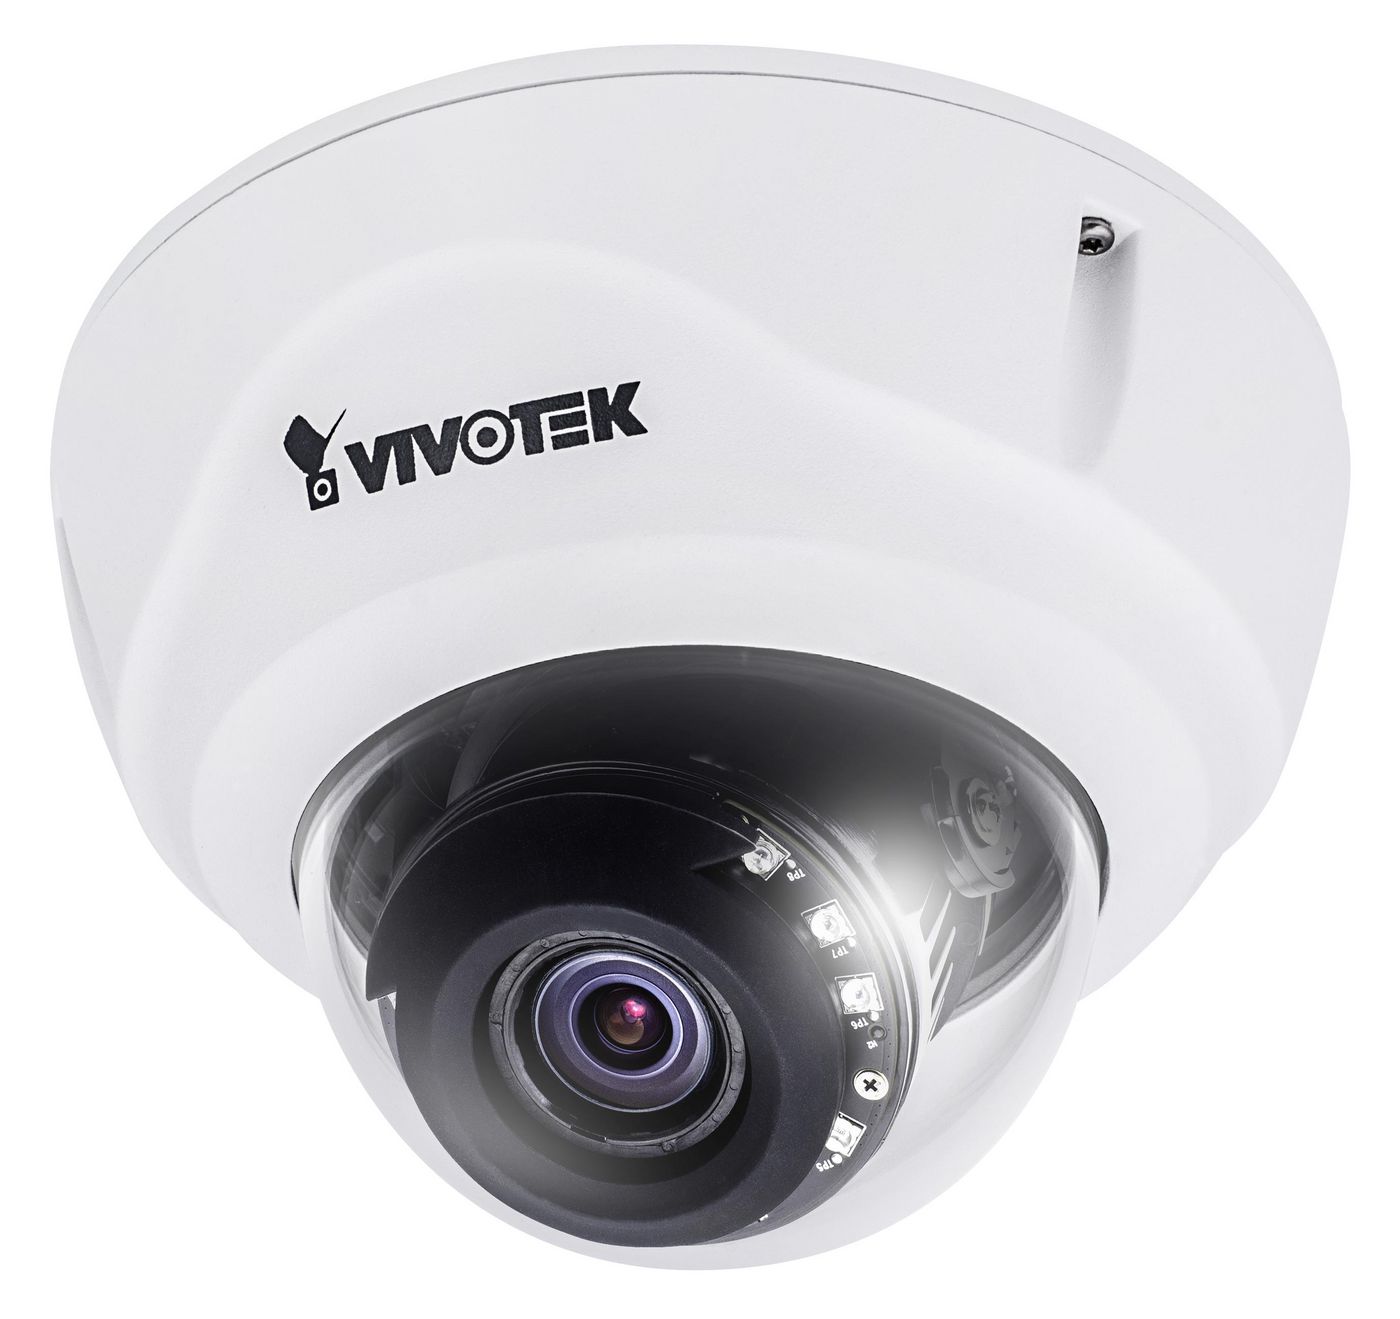 Vivotek FD9371-HTV W128783456 Security Camera Dome Outdoor 